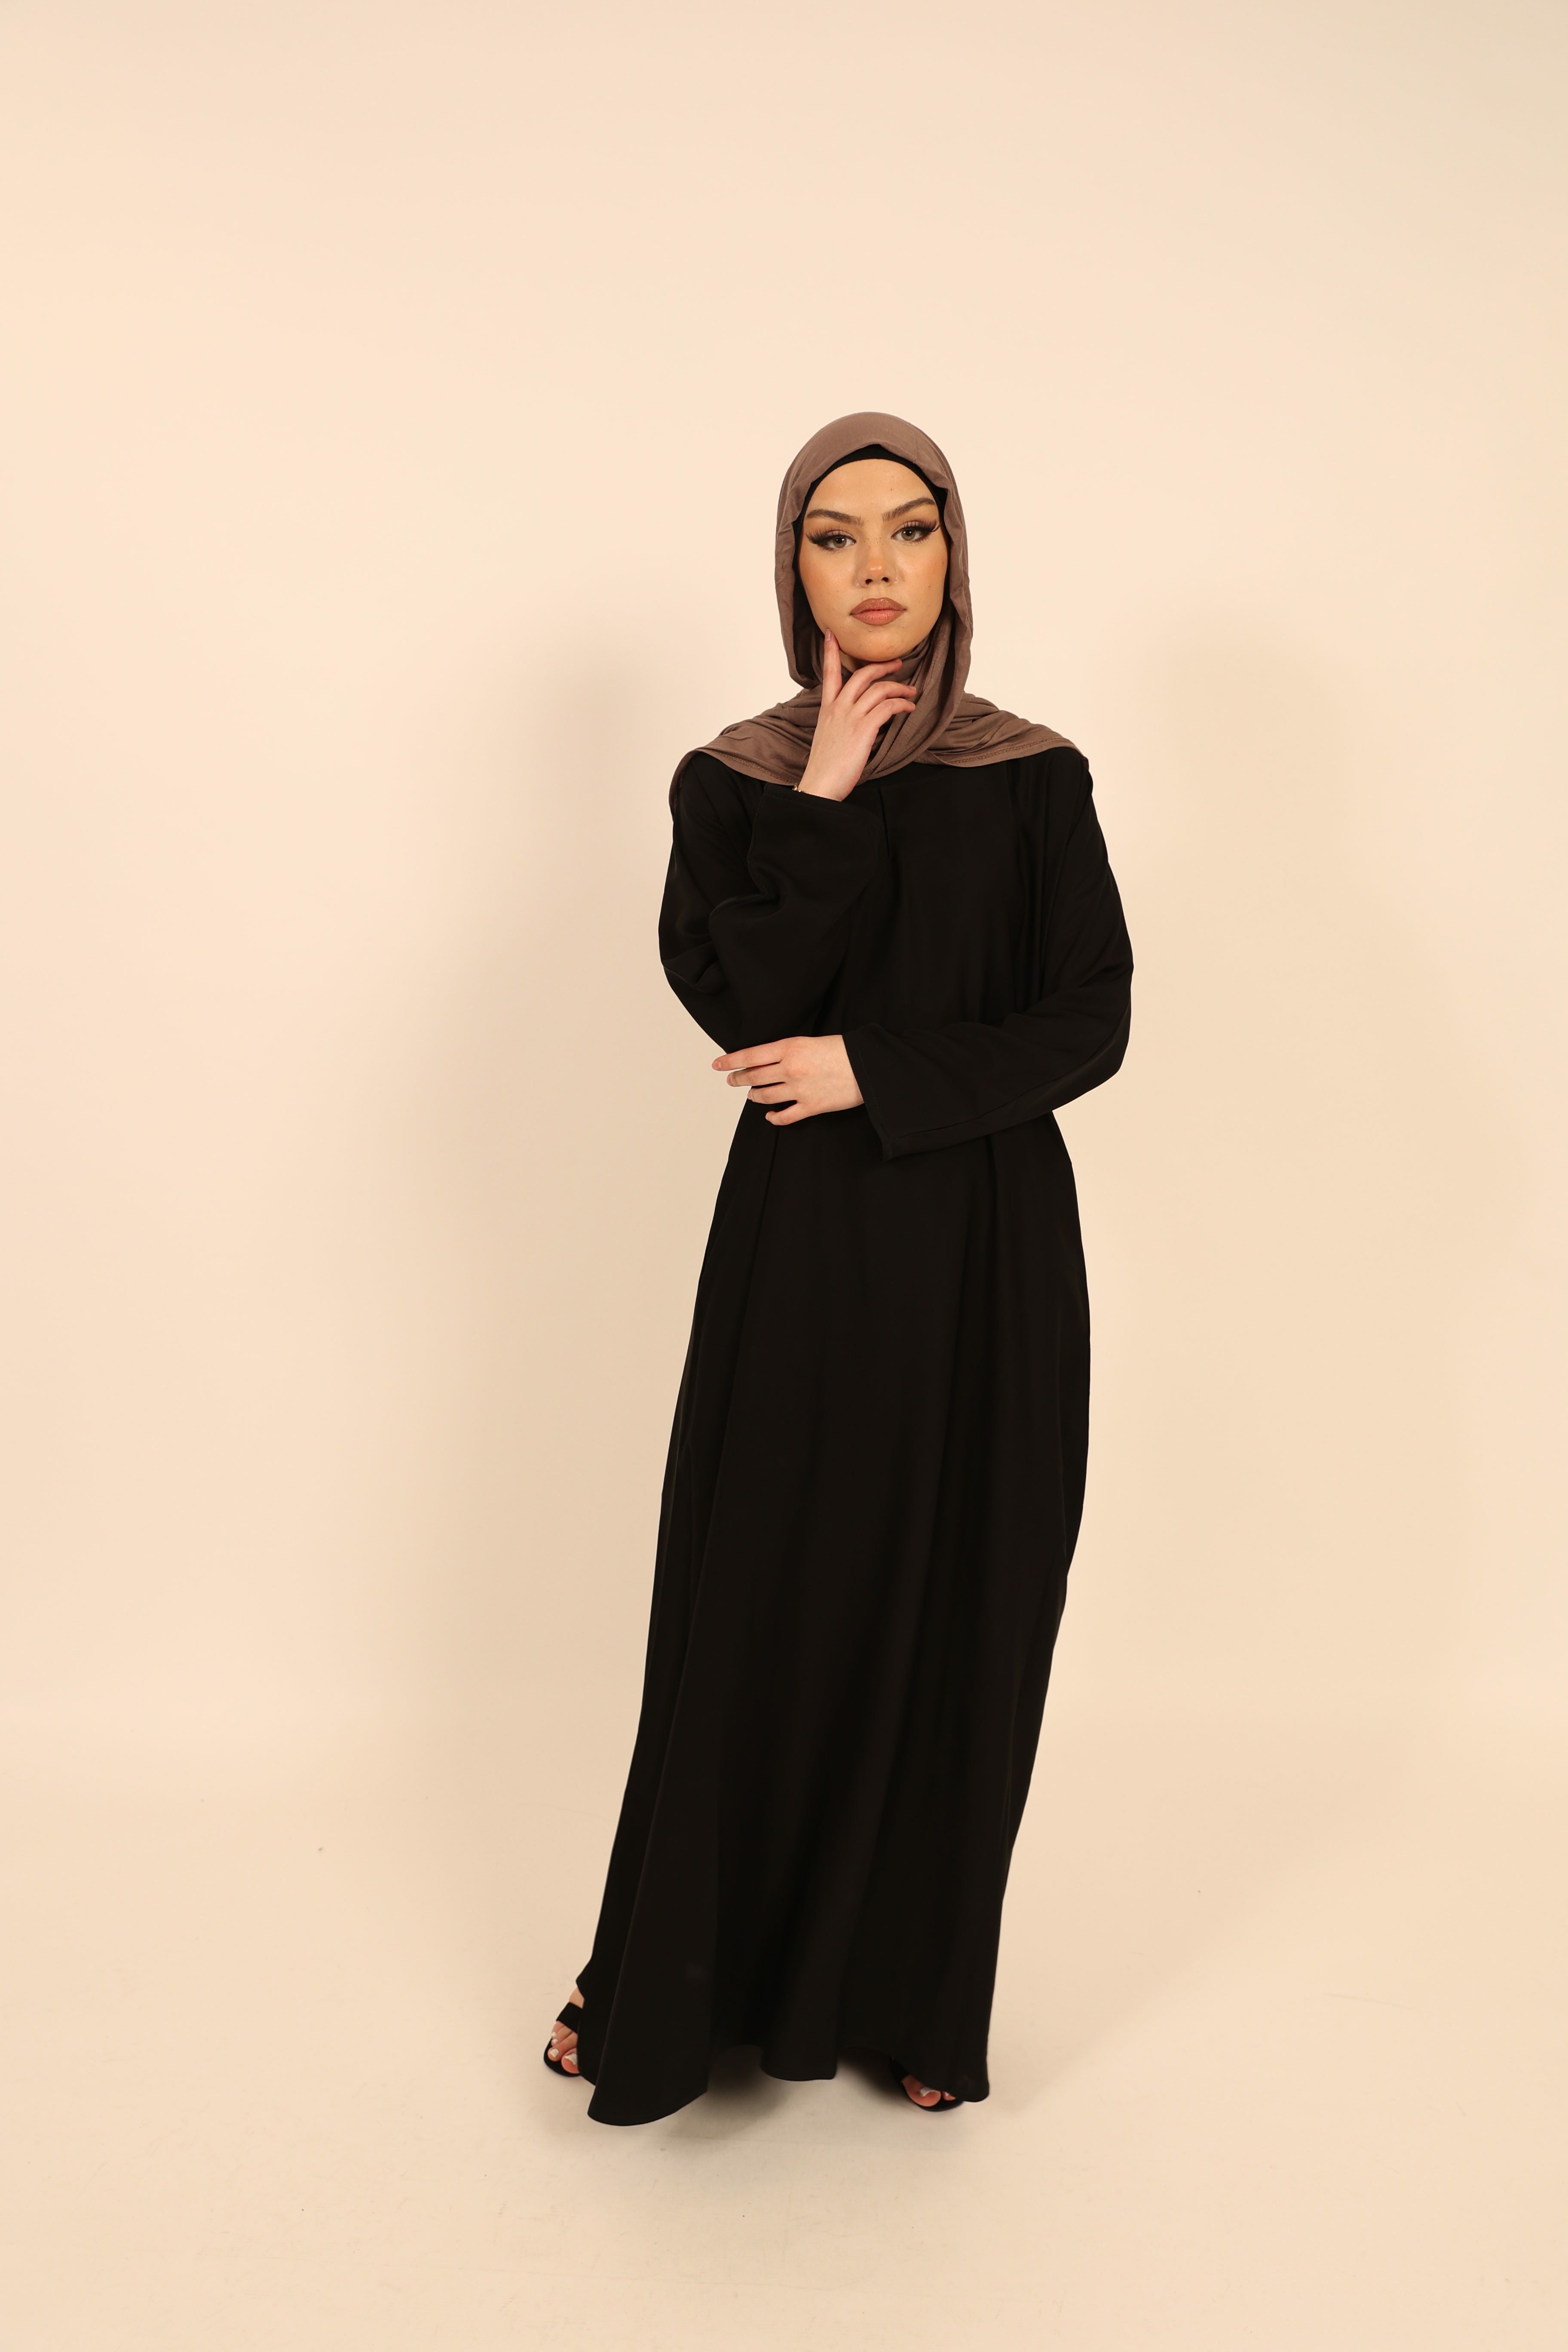 Buy Plain Black Abaya Made from Nidha Fabric